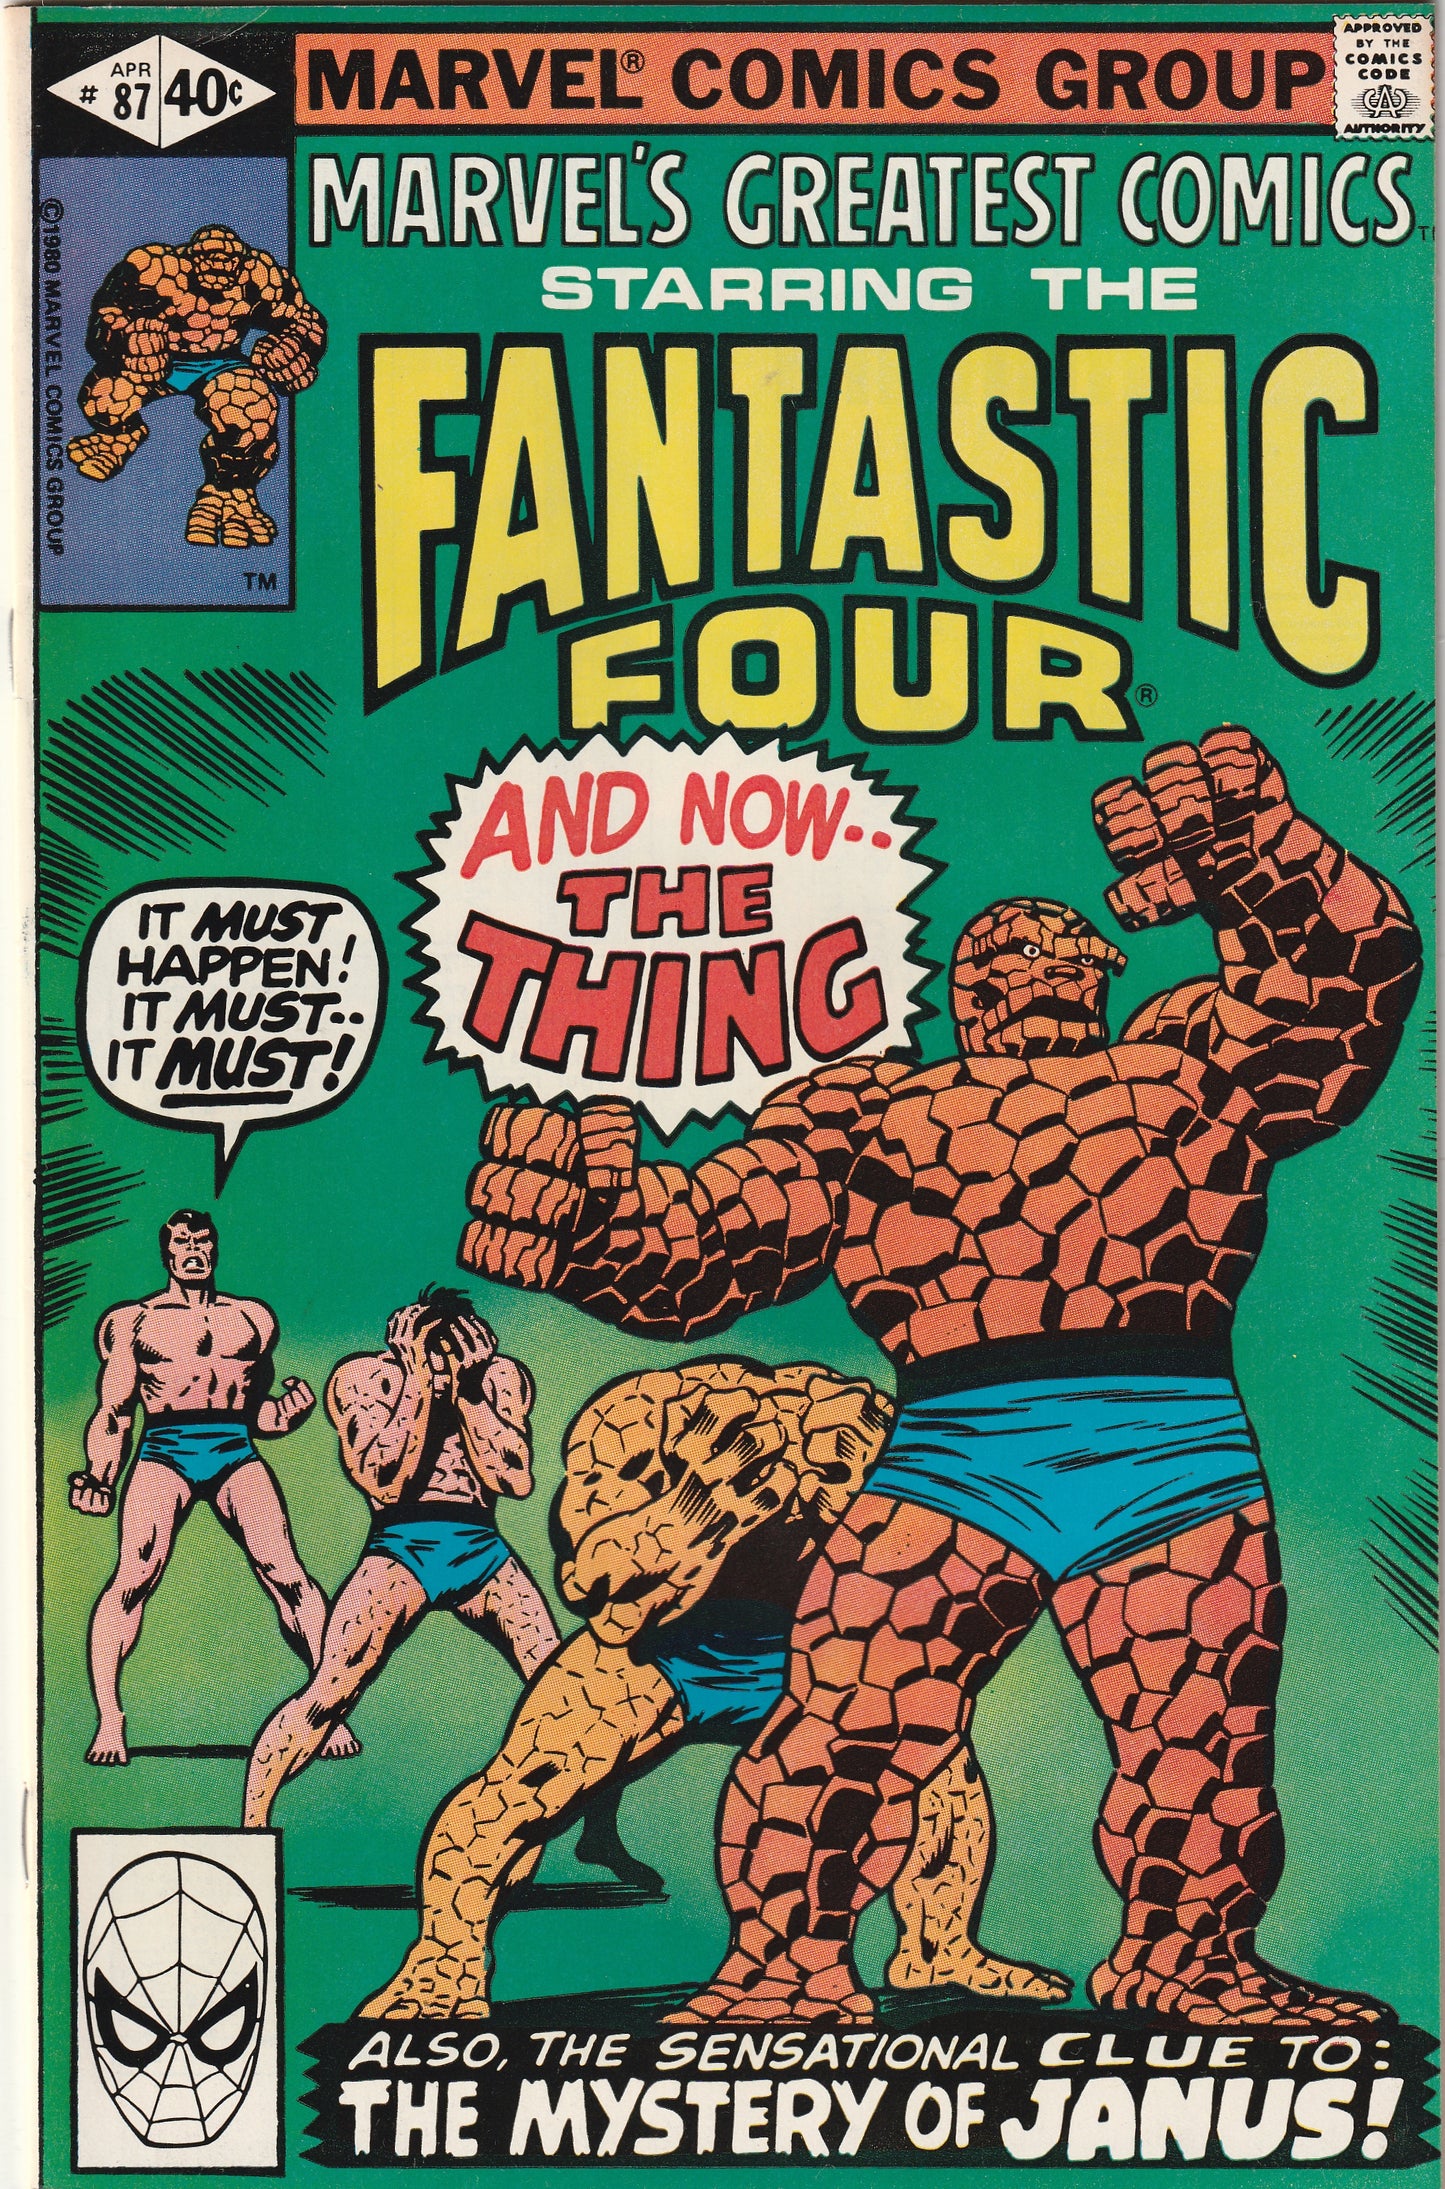 Marvel's Greatest Comics #87 (1980)